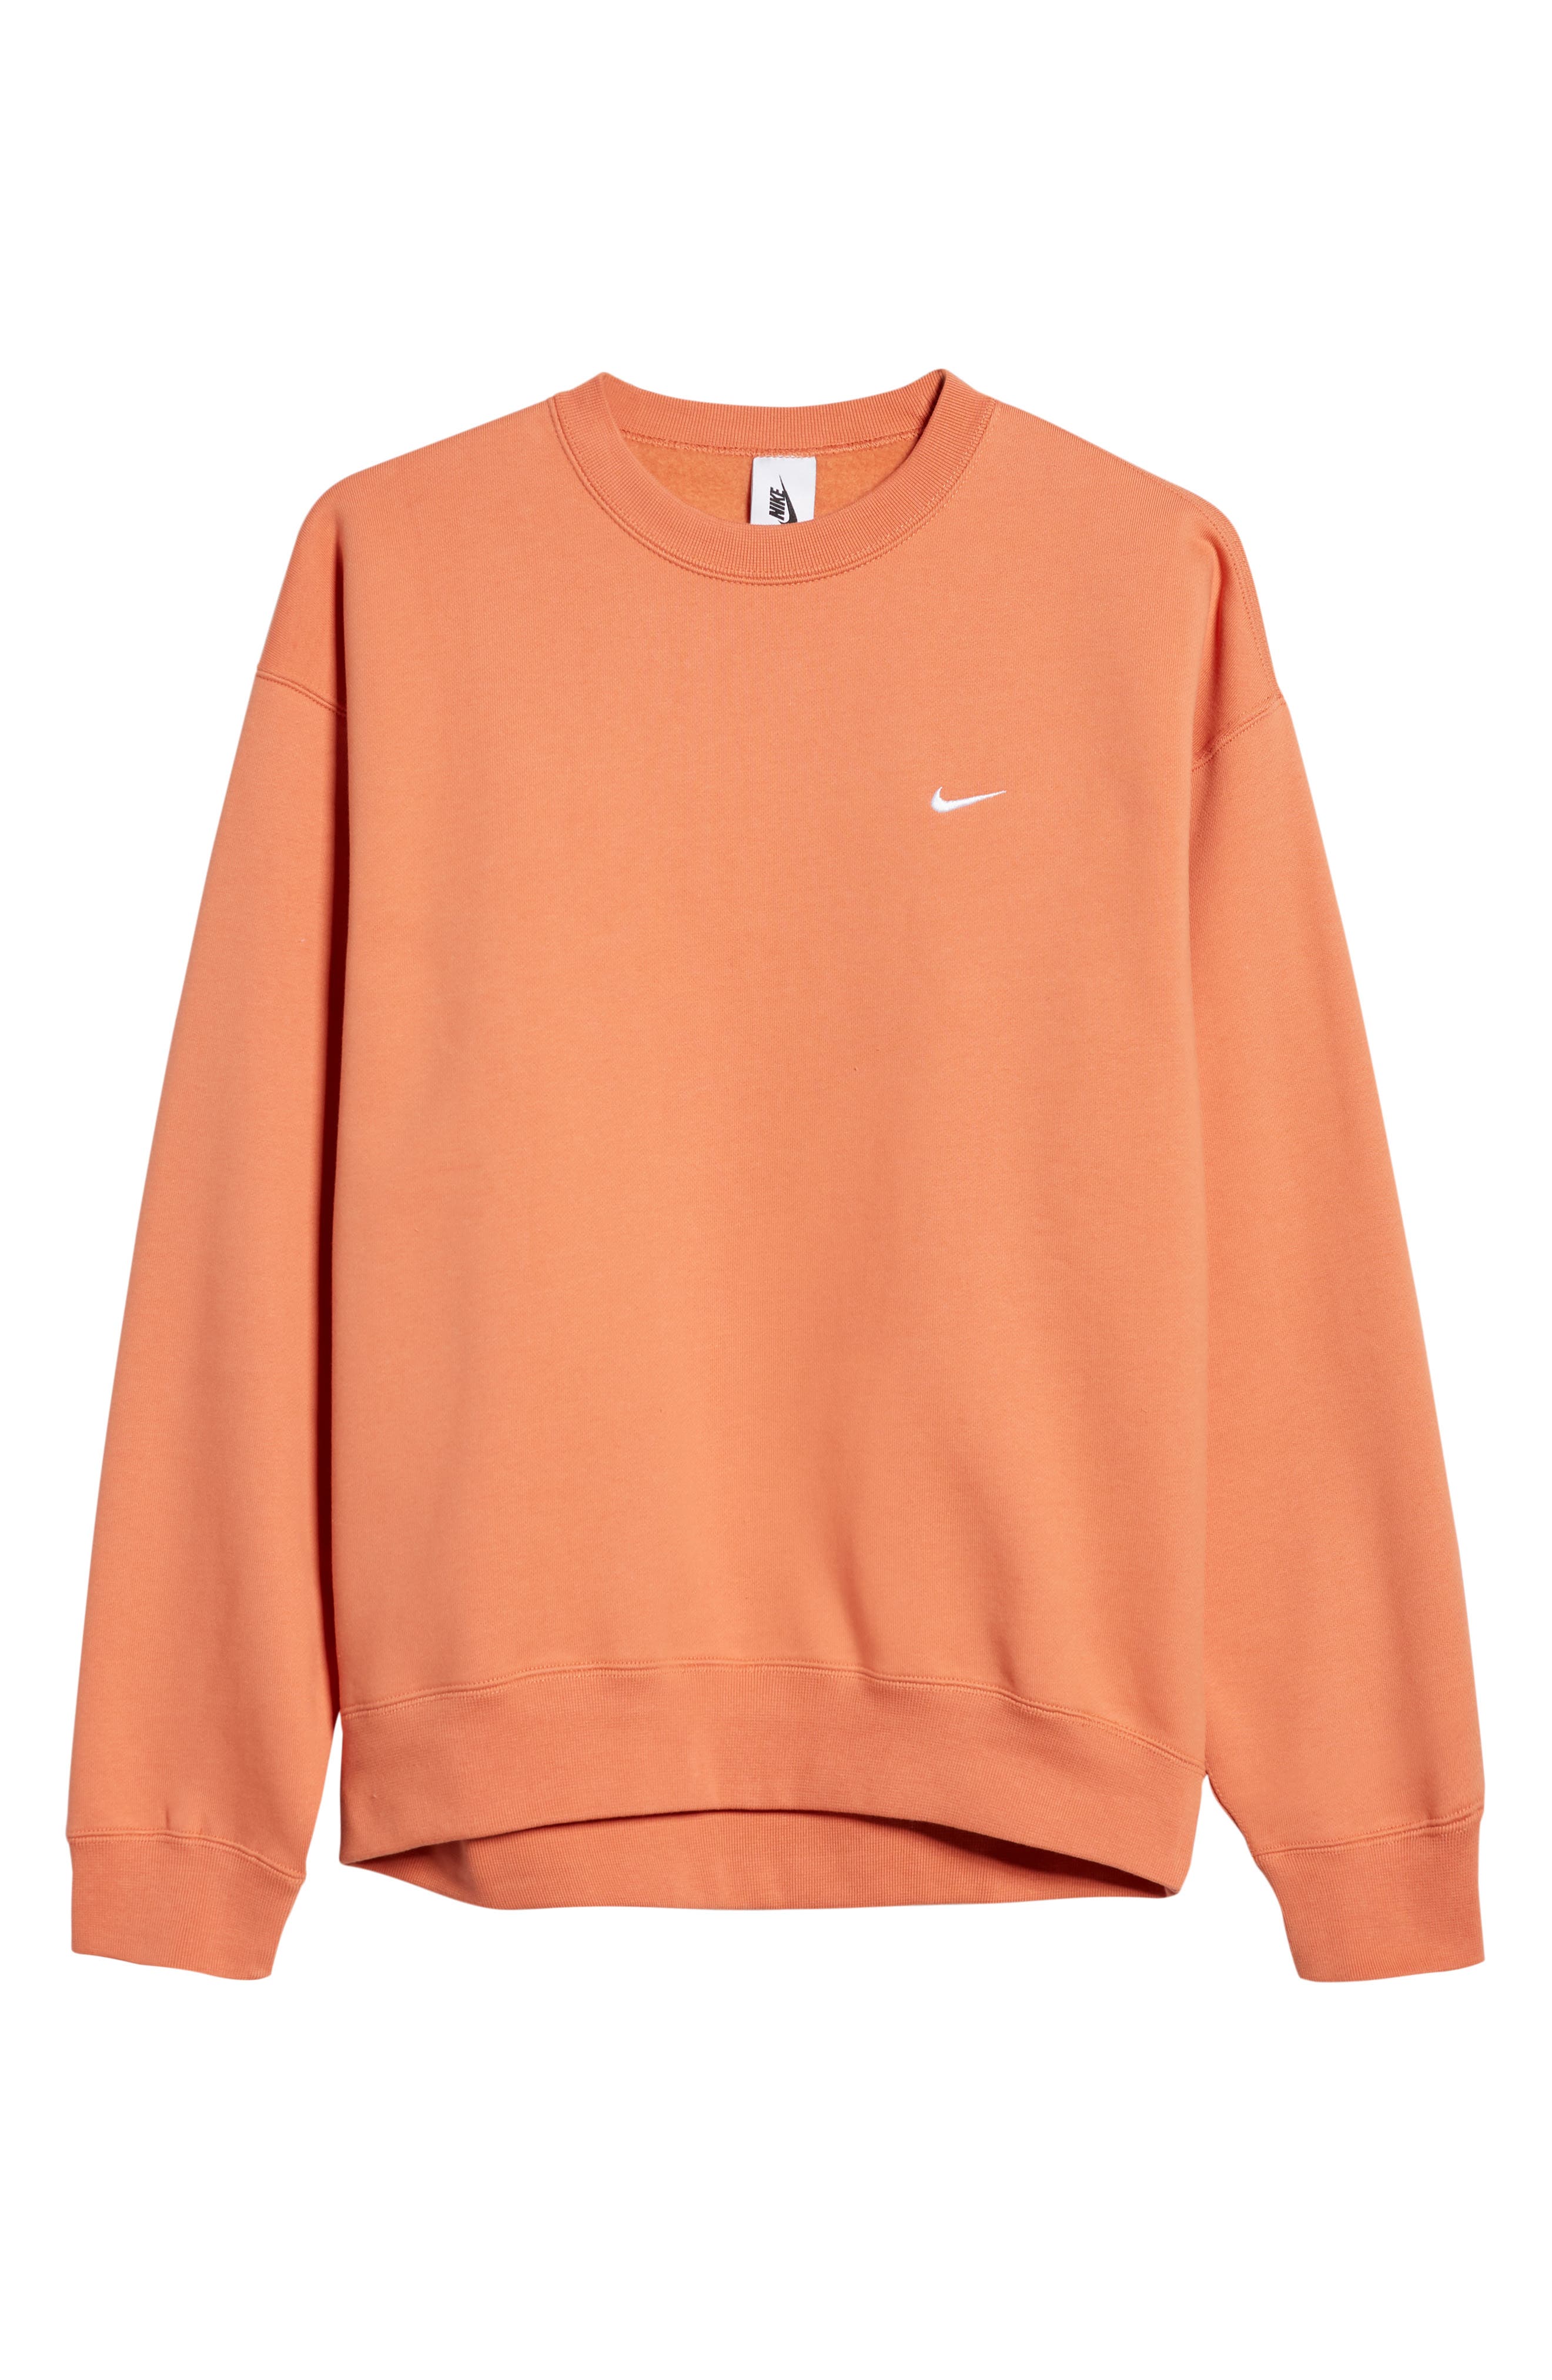 Men's Orange Nike Clothing | Nordstrom